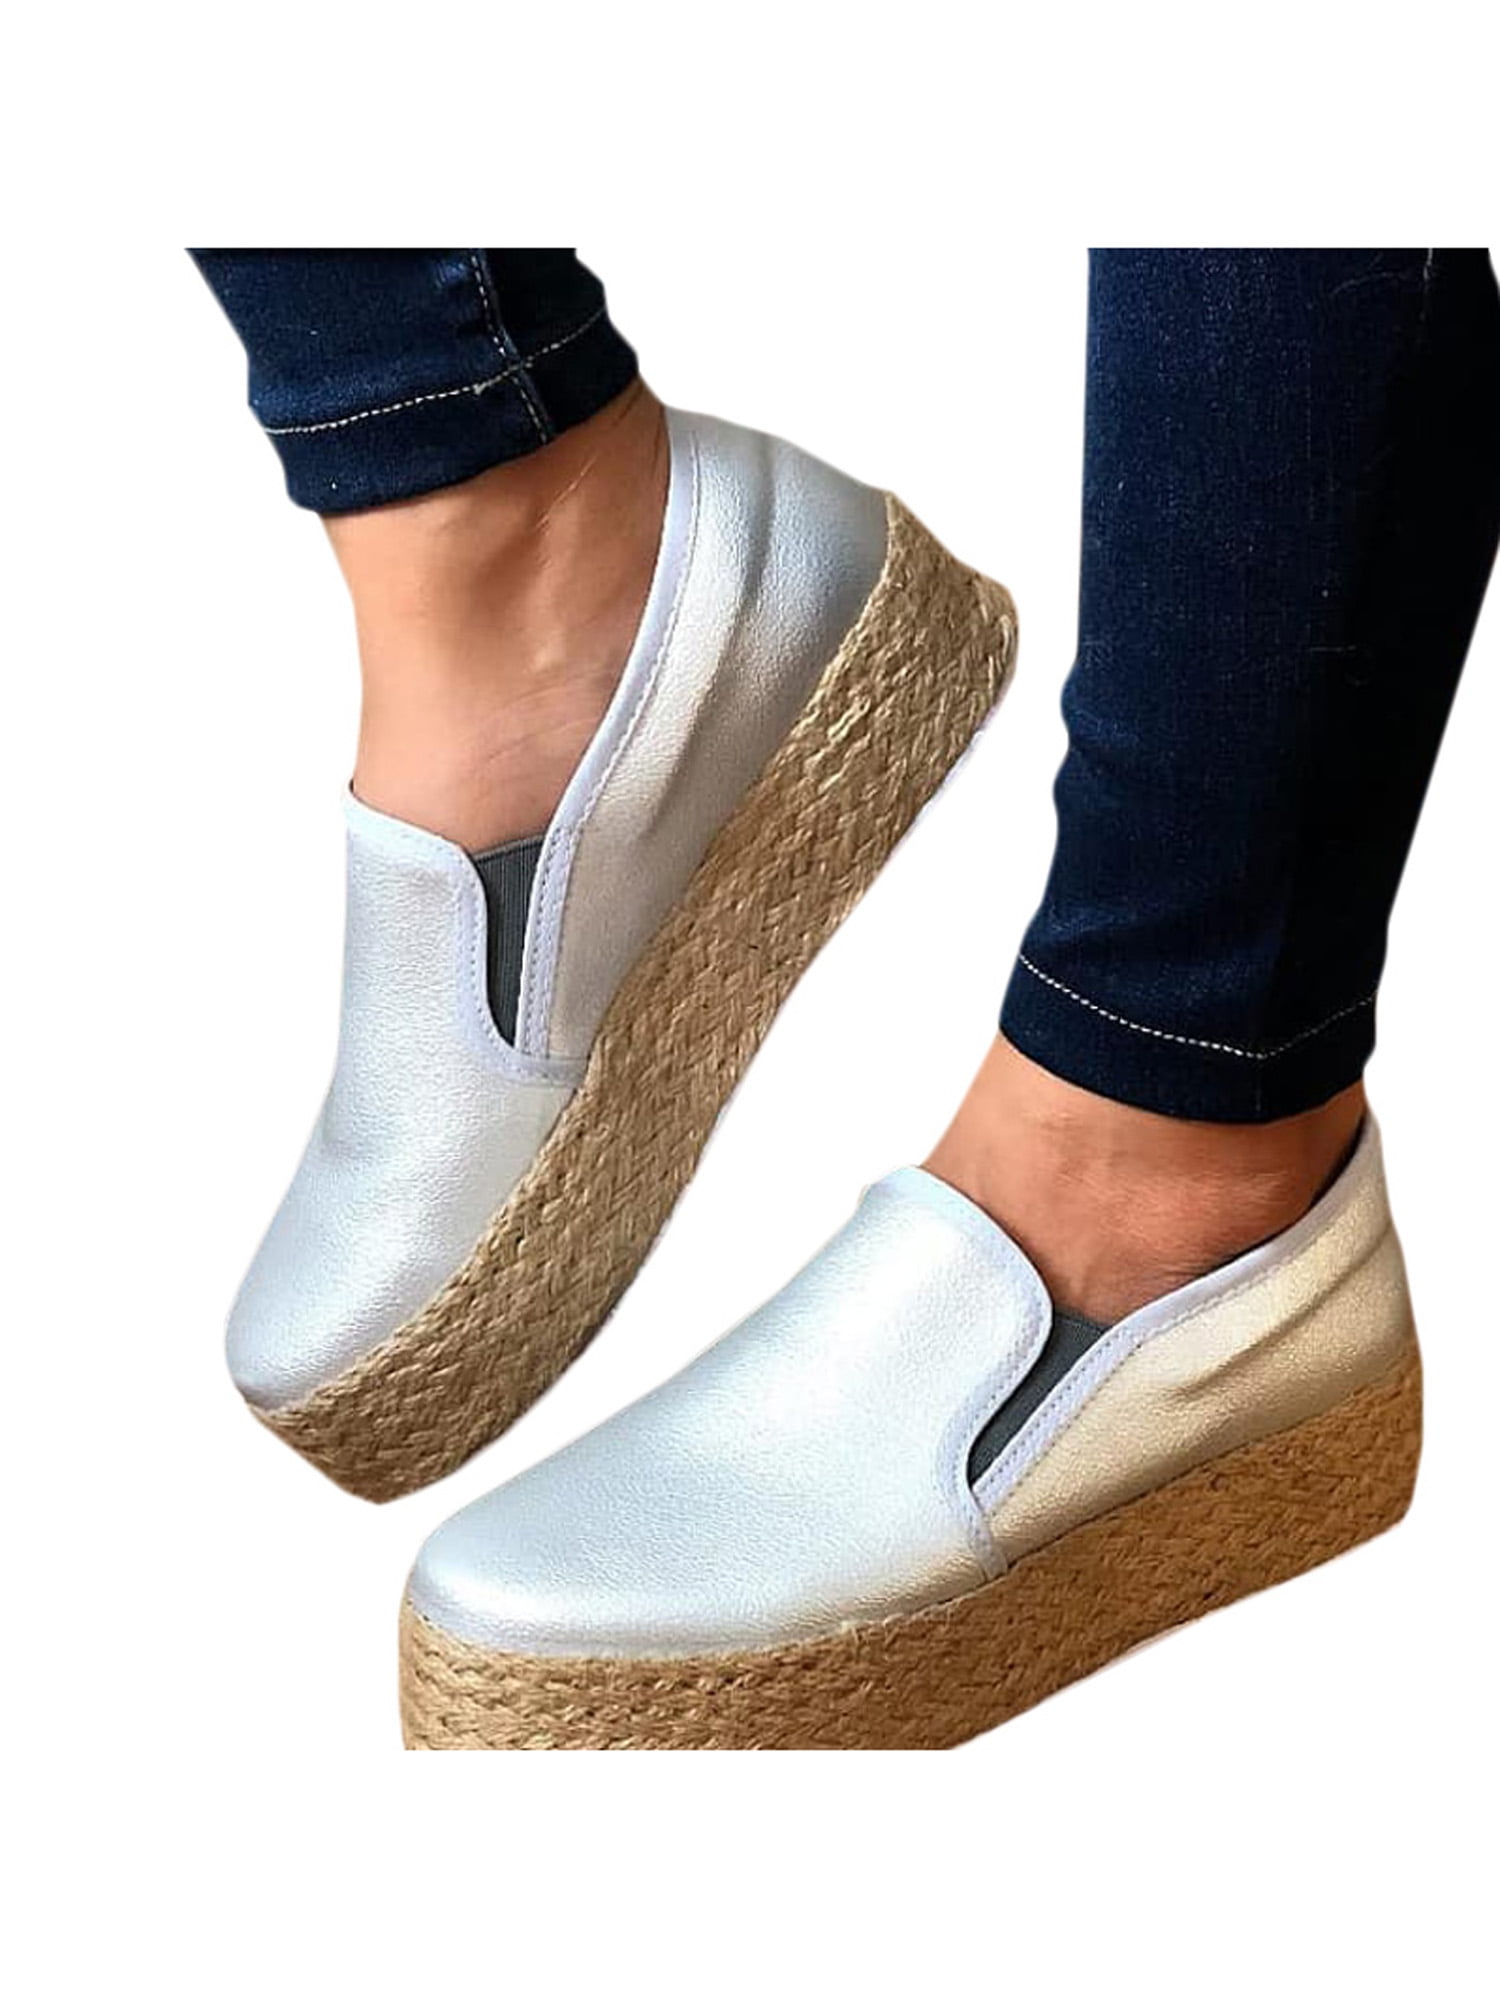 Dainzusyful Loafers for Women Fashion Round Toe Retro Platform Flat Heel Sneakers Womens Casual Zip Walking Shoes 